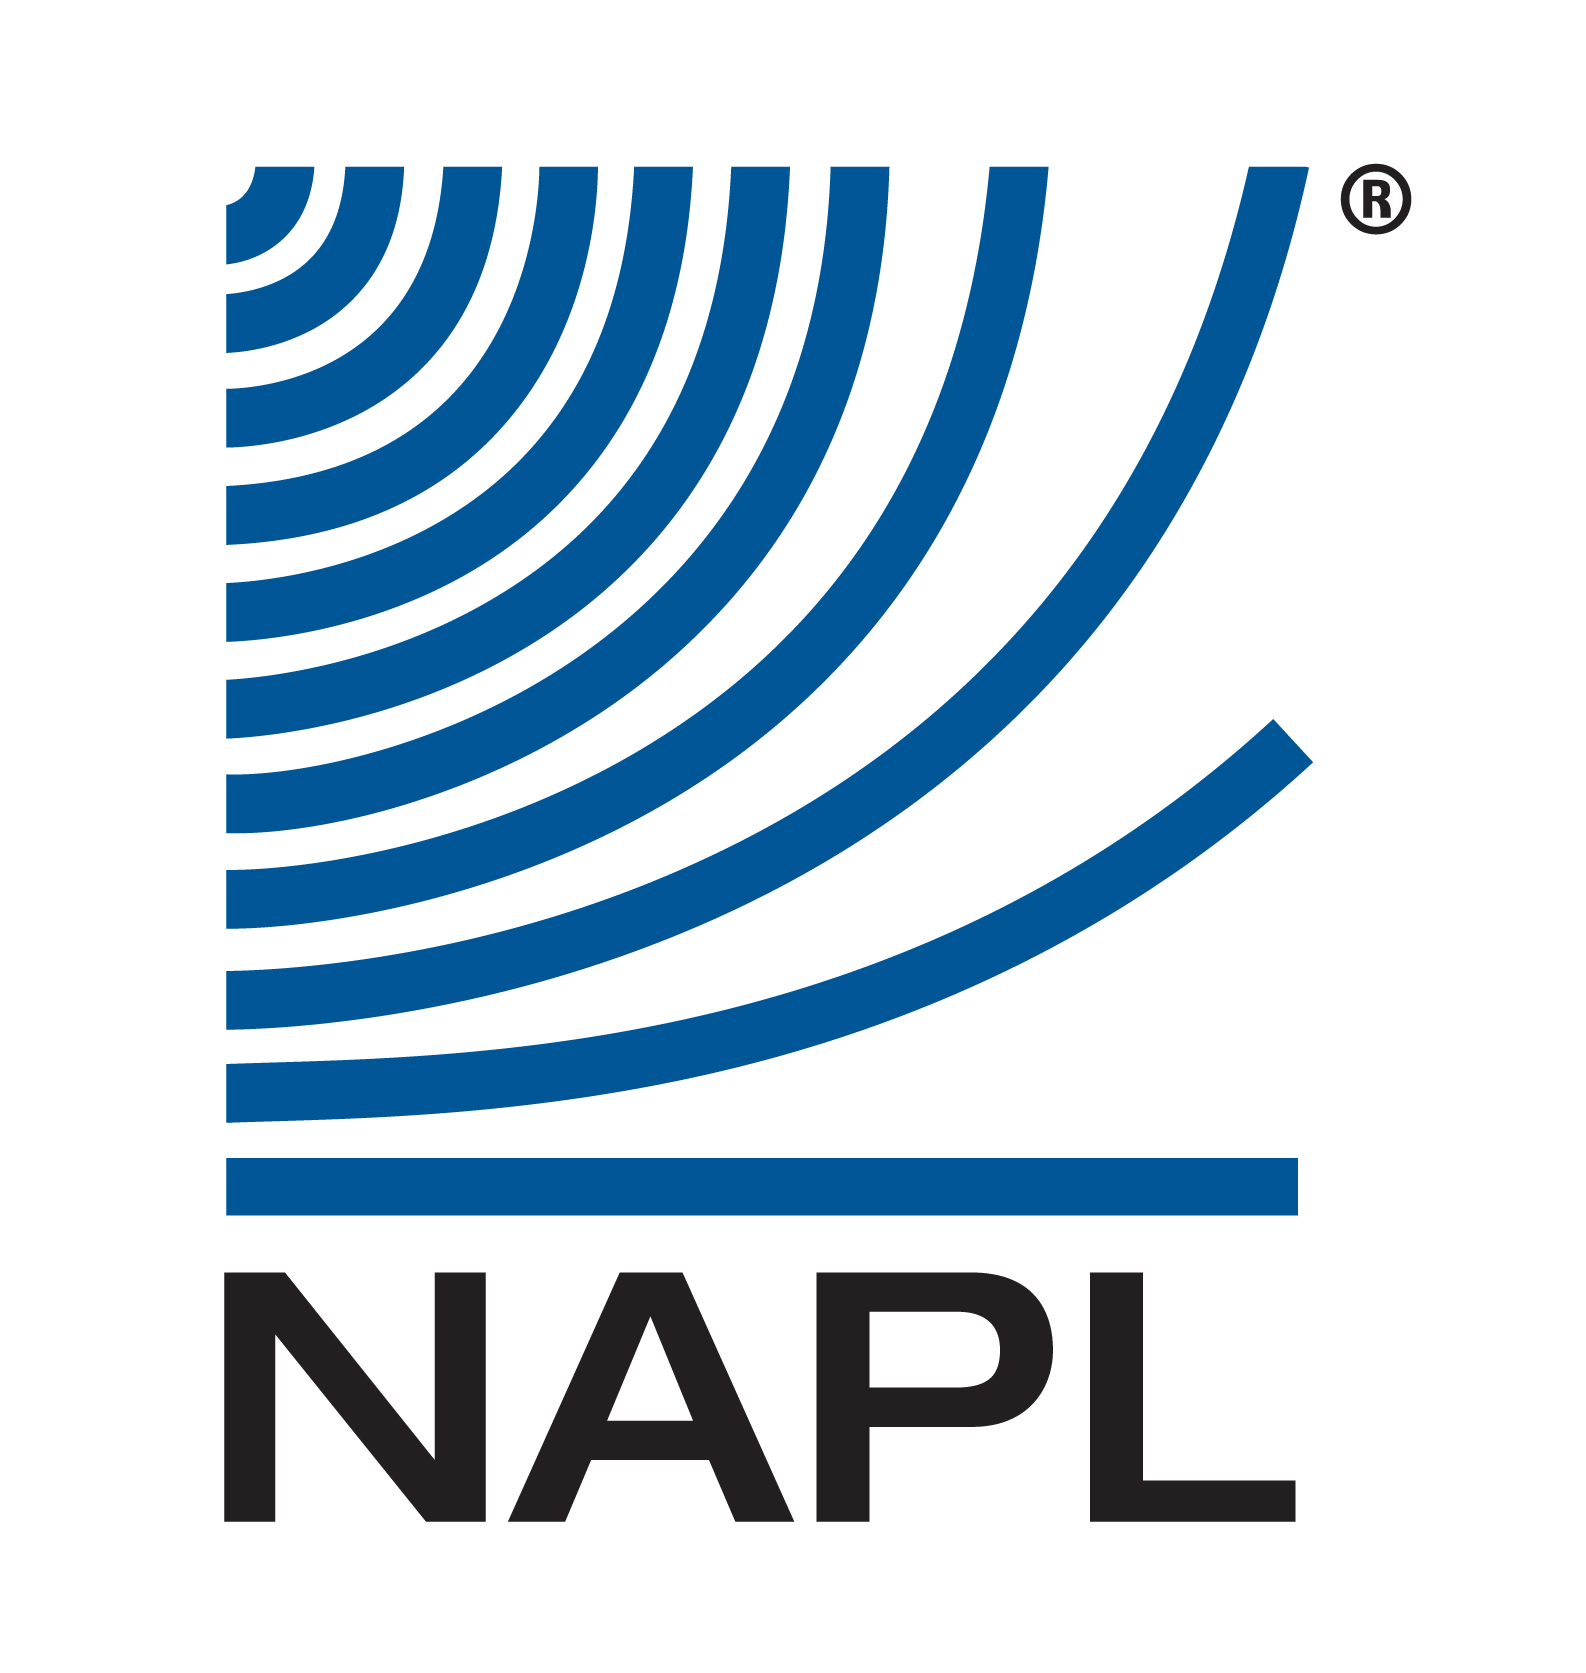 NAPL logo